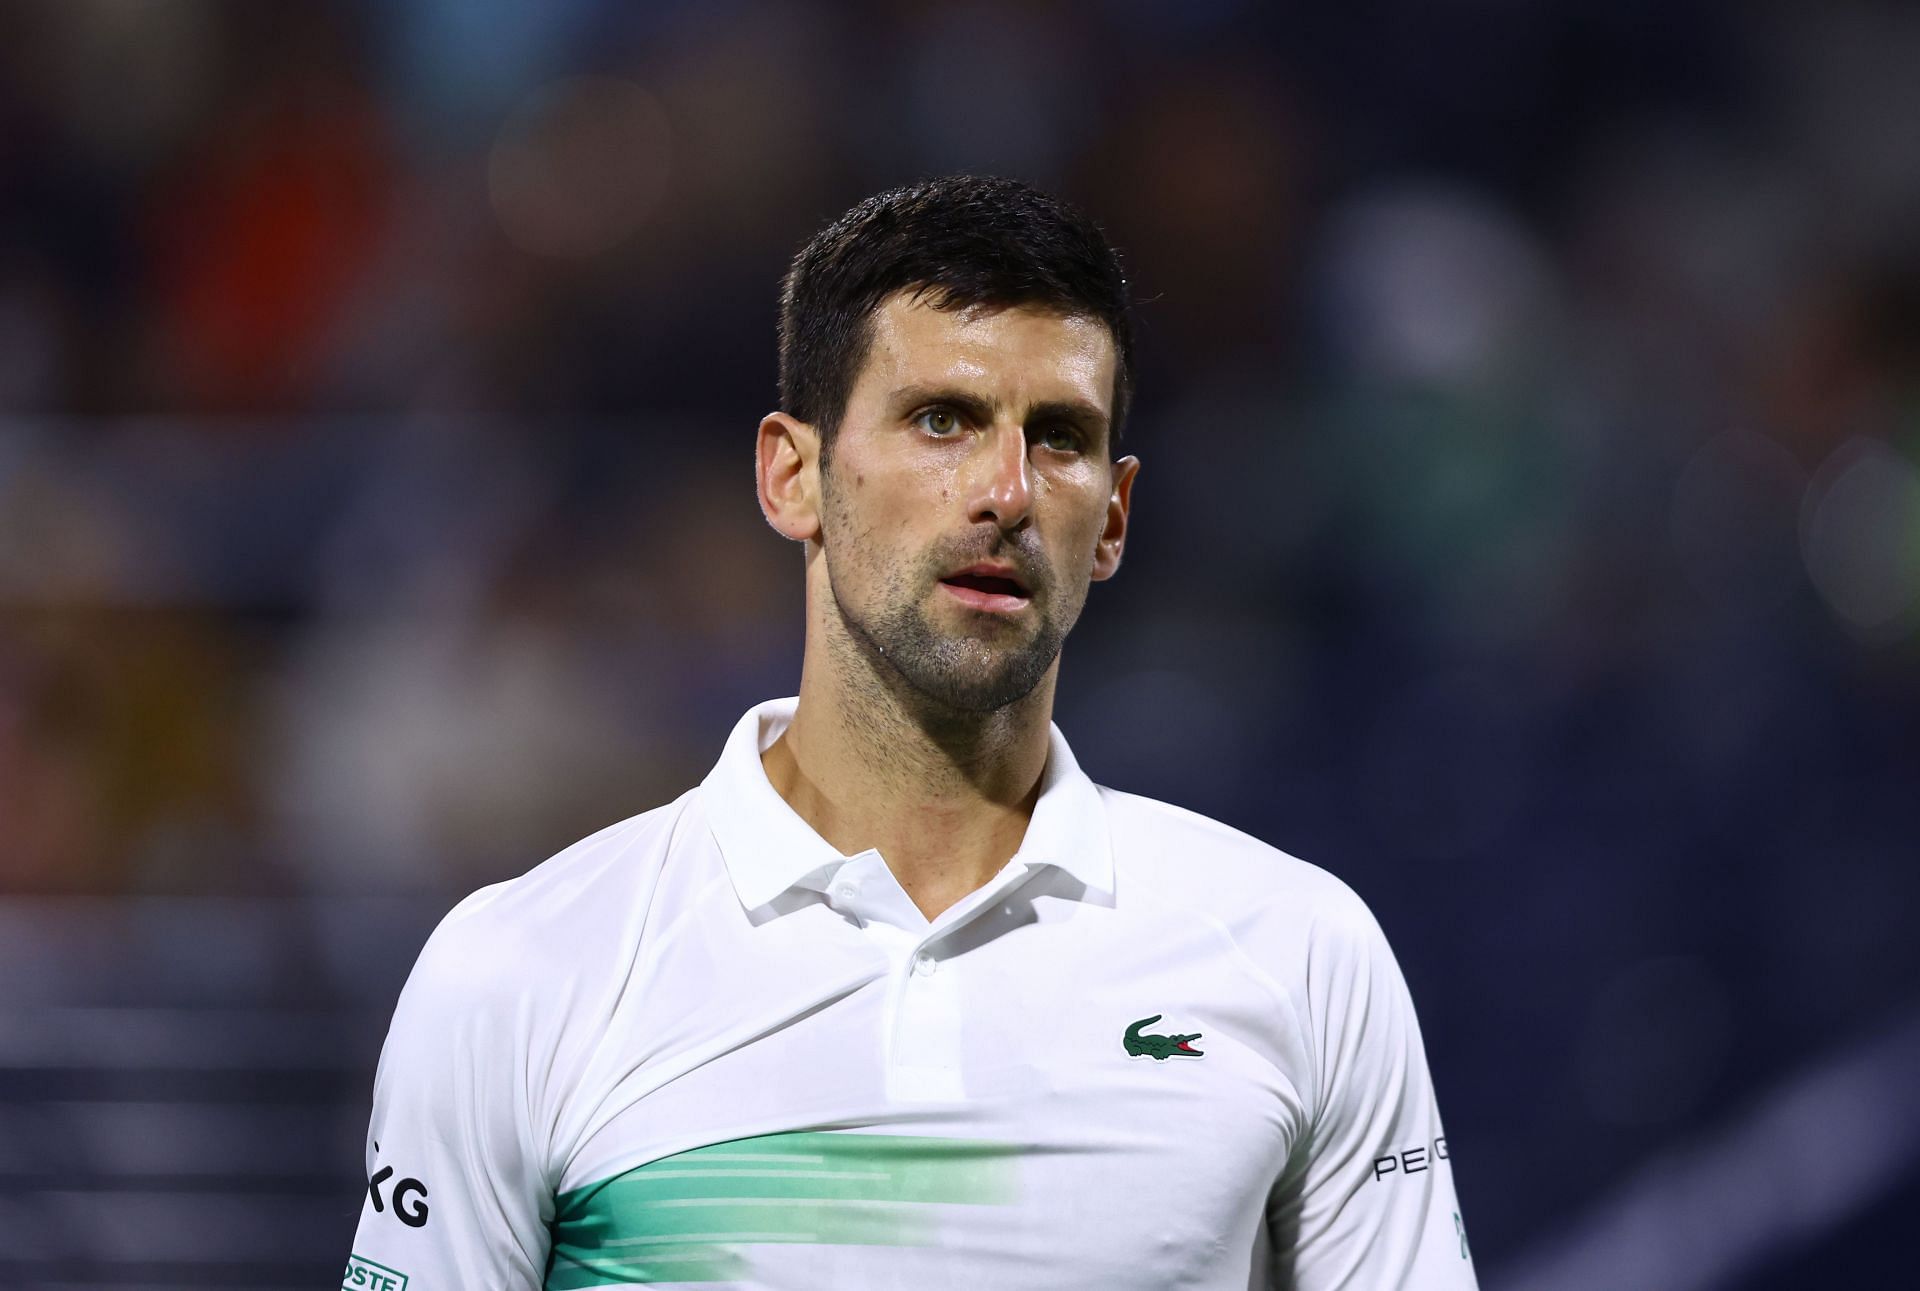 Novak Djokovic at the 2022 Dubai Open